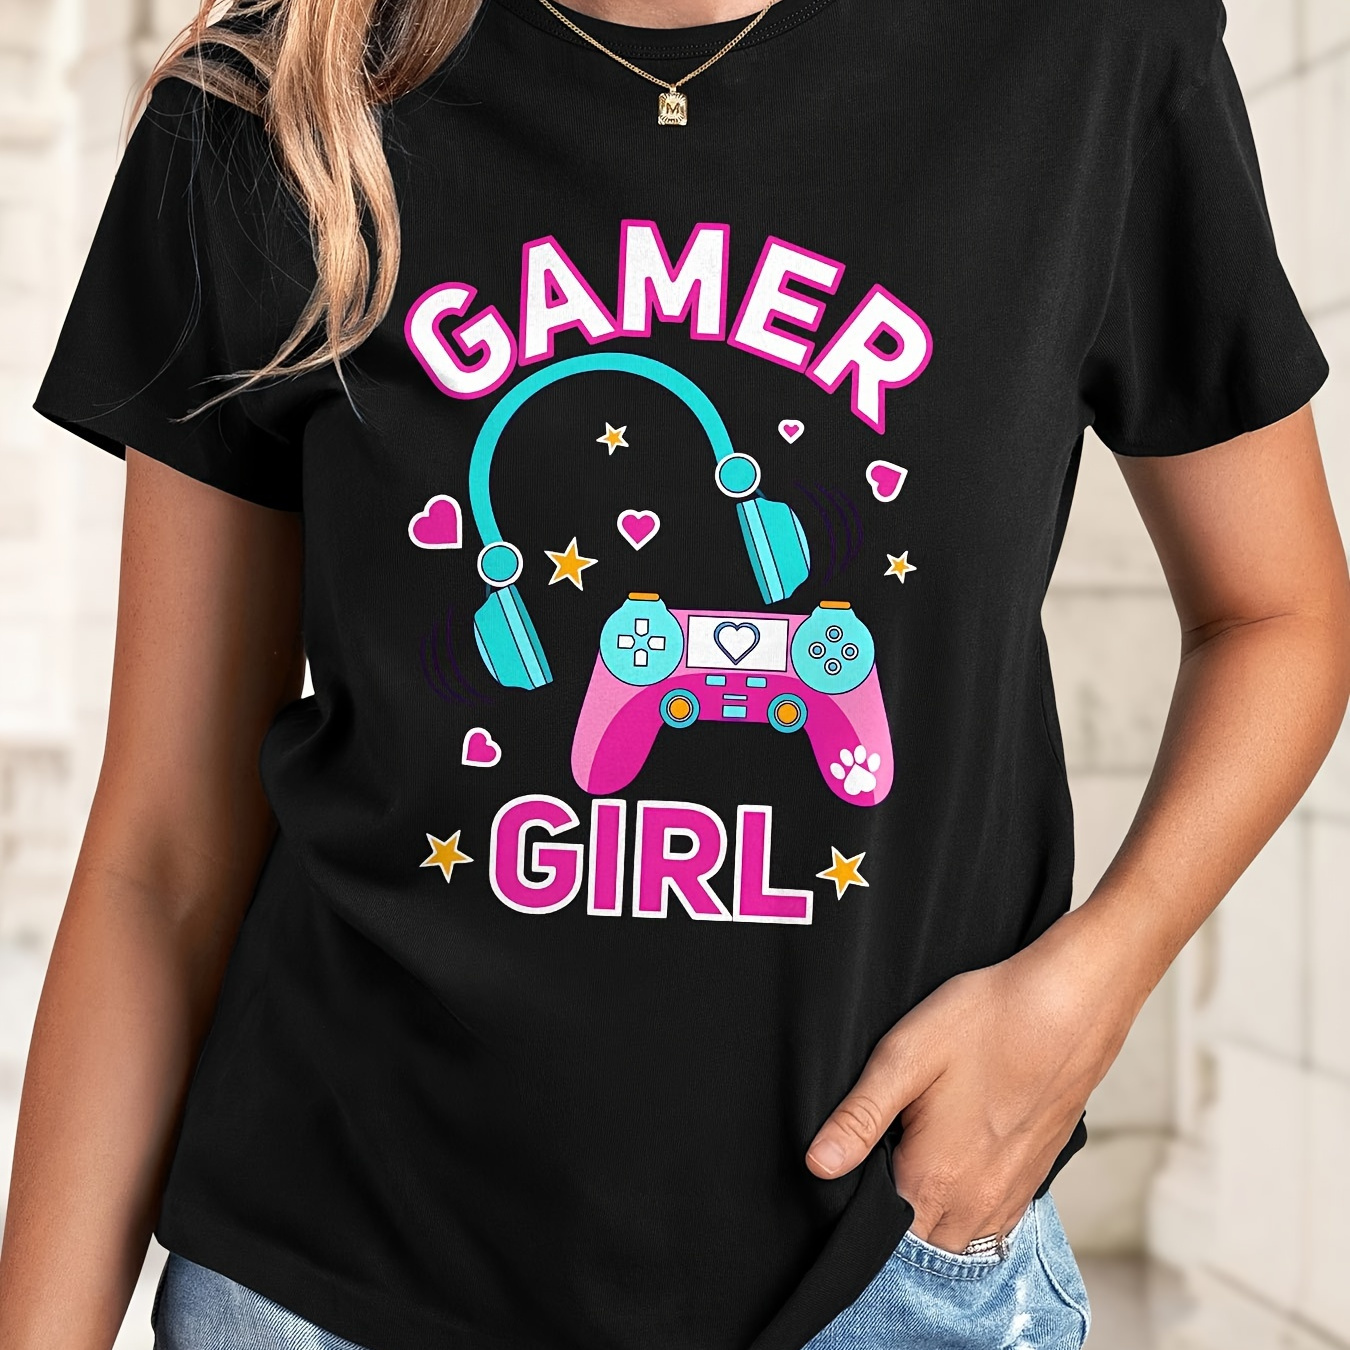 

Cool Gamer Girl Print Round Neck T-shirt, Casual Stretch Short Sleeve Sport T-shirt, Women's Clothing